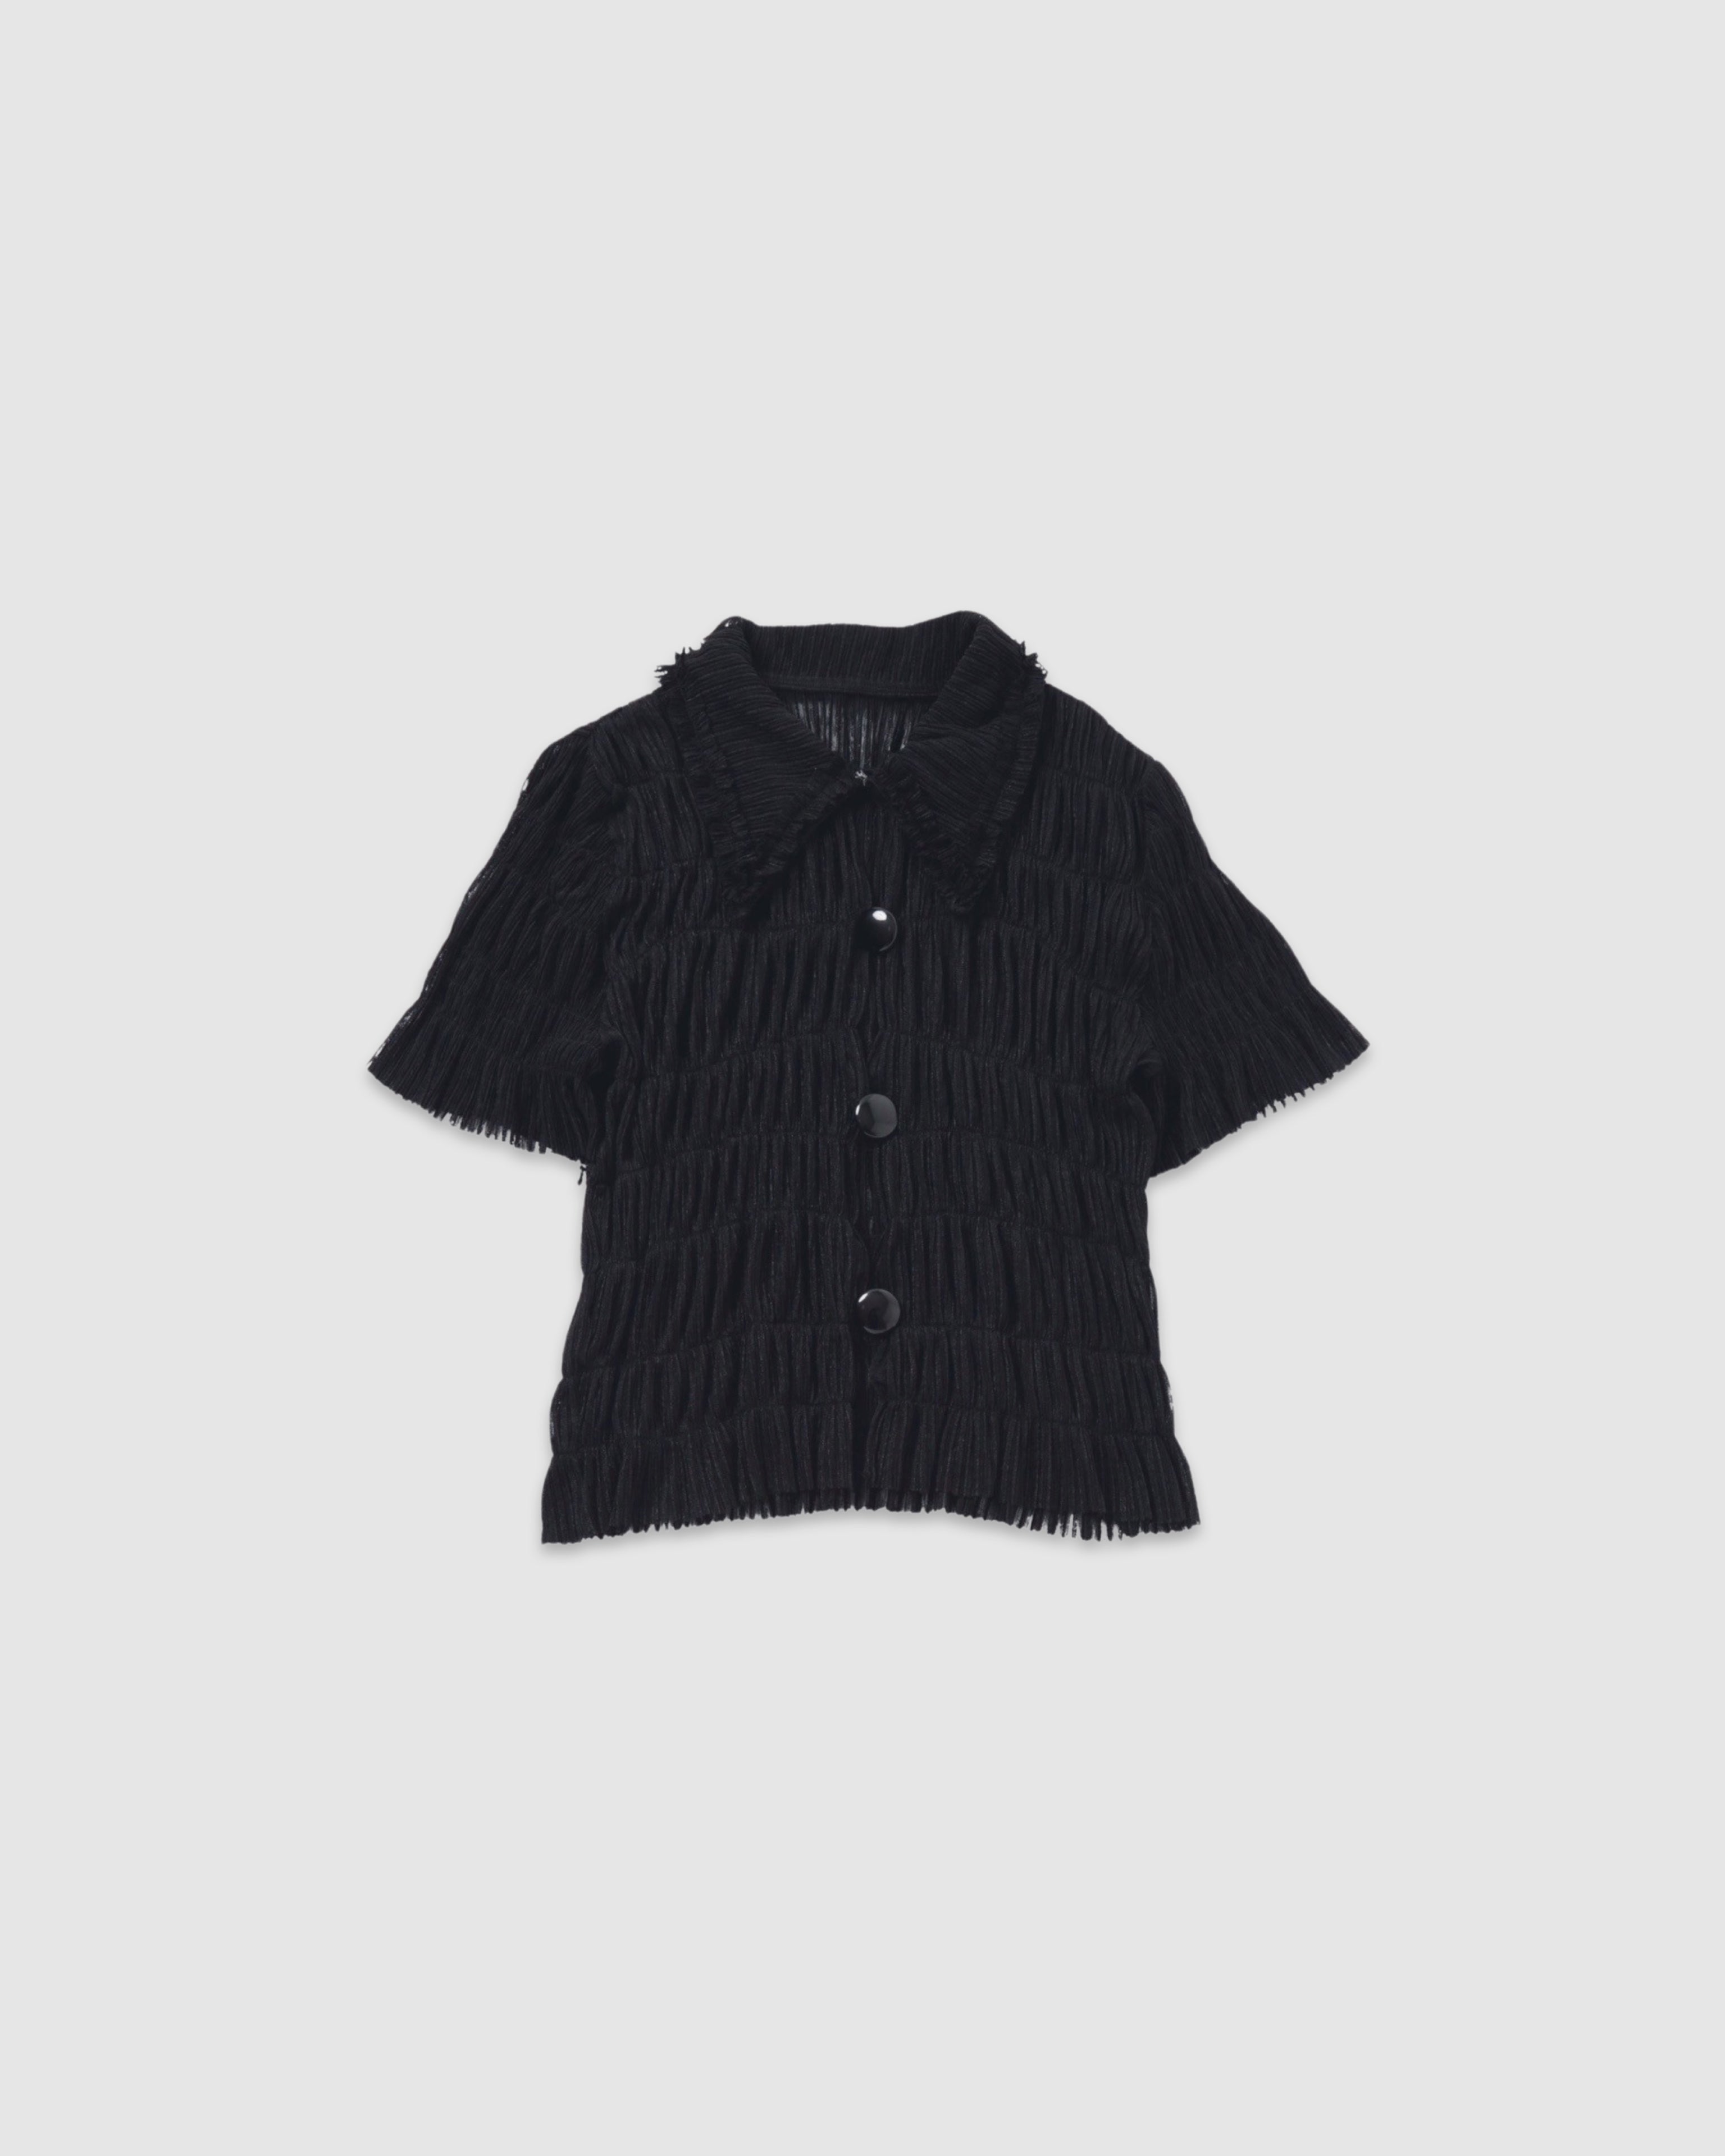 Shirring sheer shirt (black)